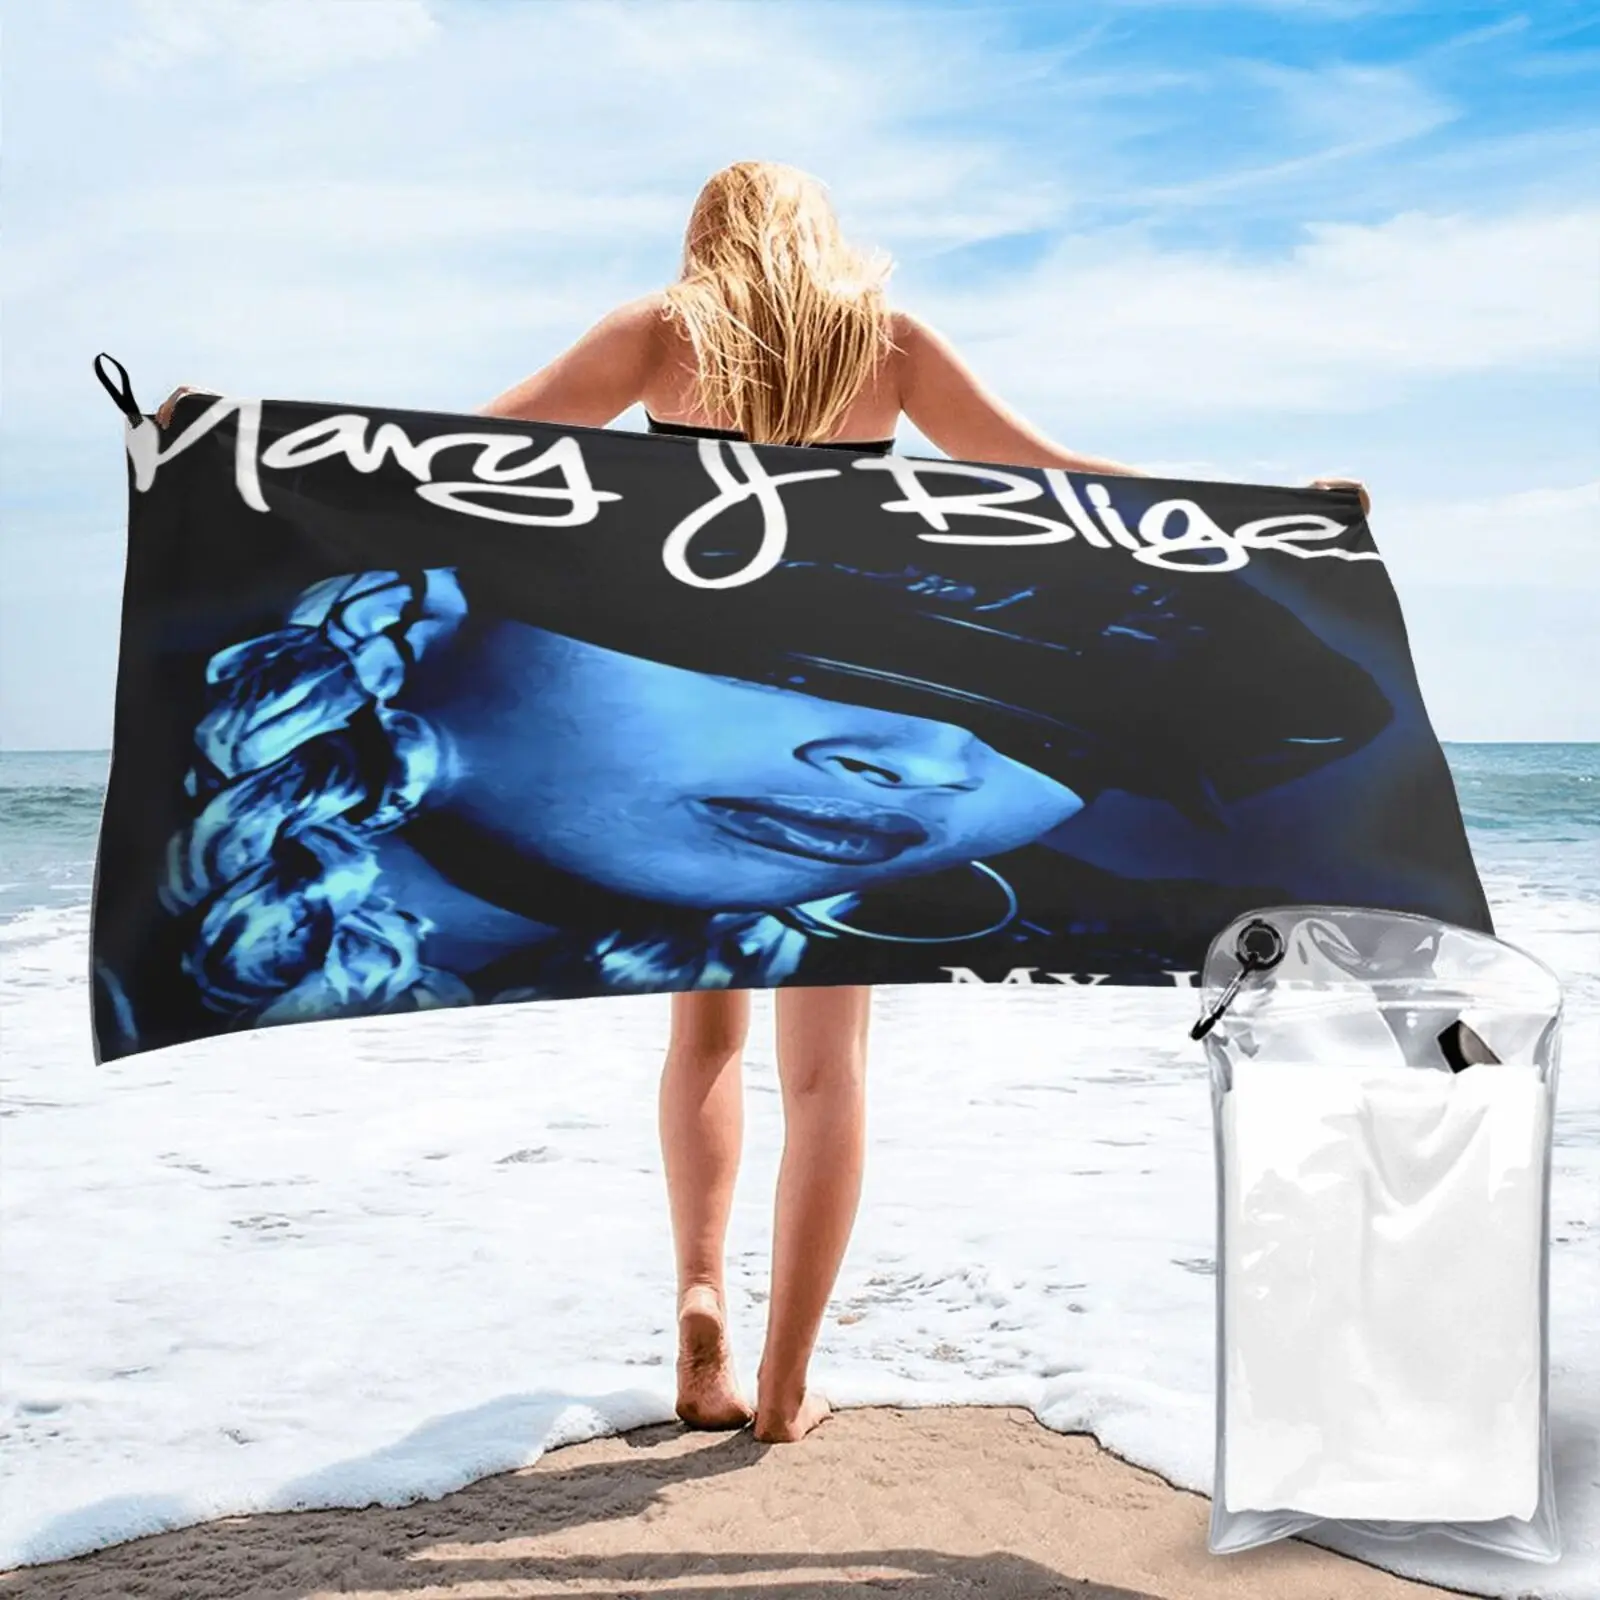 

Пляжное полотенце Mary J Bl1Ge My Life 2020, банный халат, женское полотенце, банное полотенце для лица, банное полотенце, Большое пляжное полотенце дл...